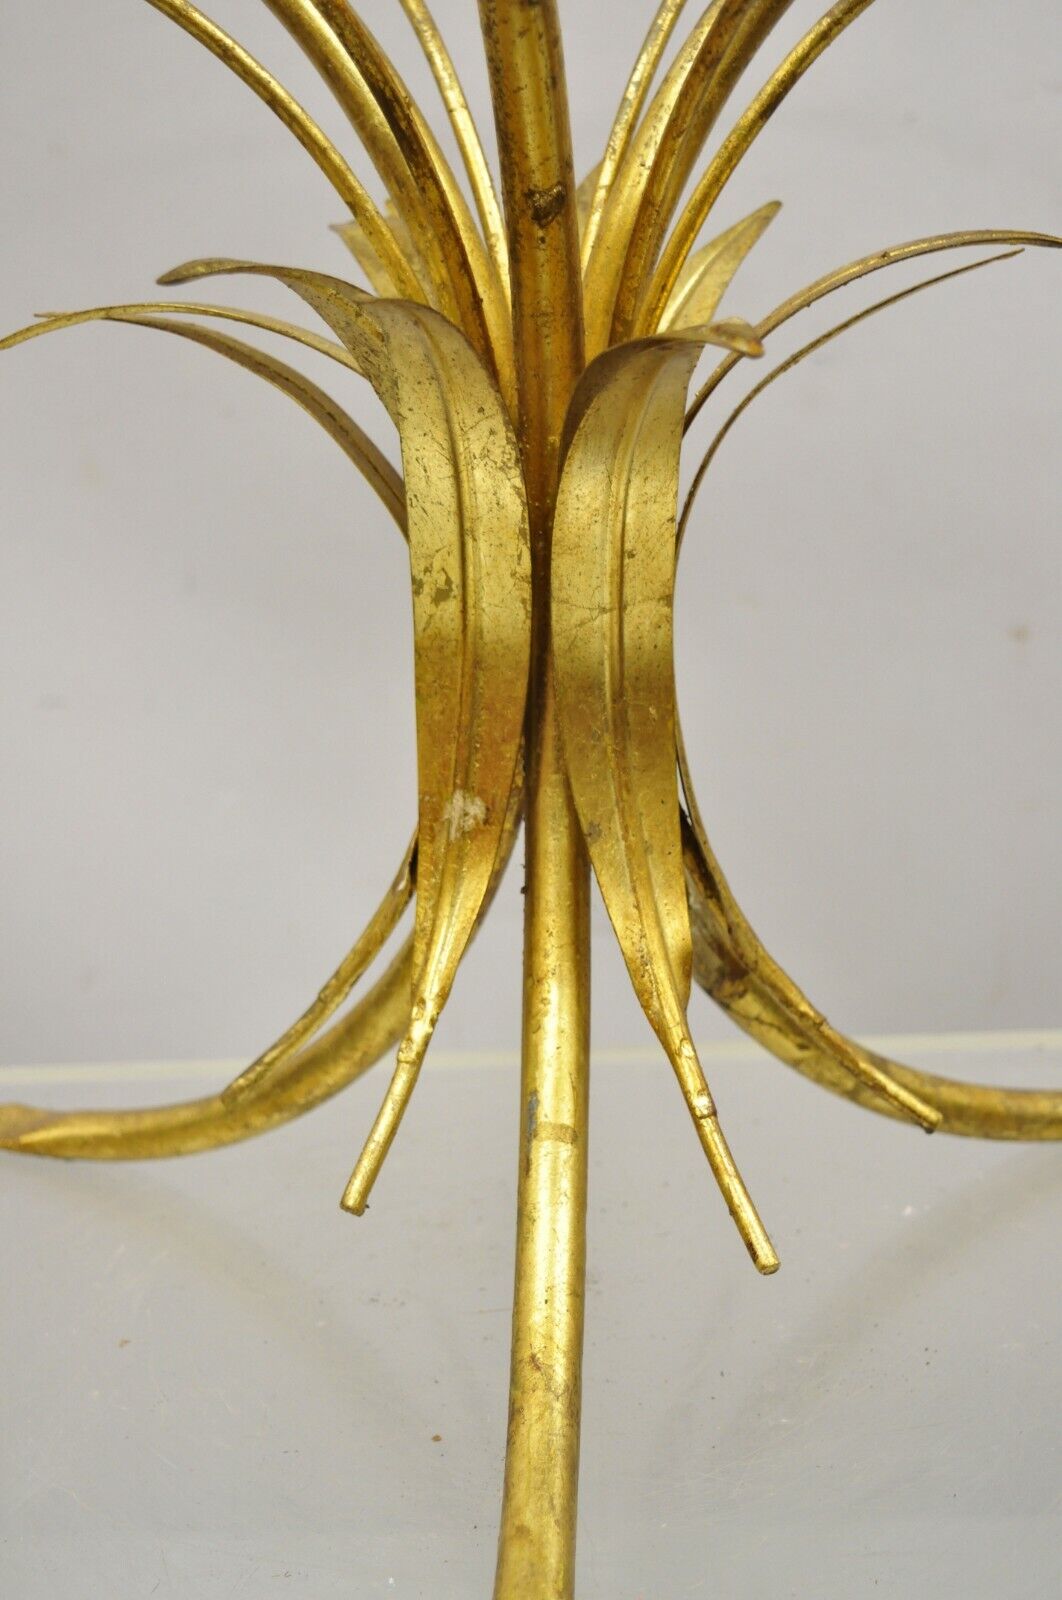 Vintage Gold Gilt Italian Hollywood Regency Palm Leaf Sheaf of Wheat Side Table